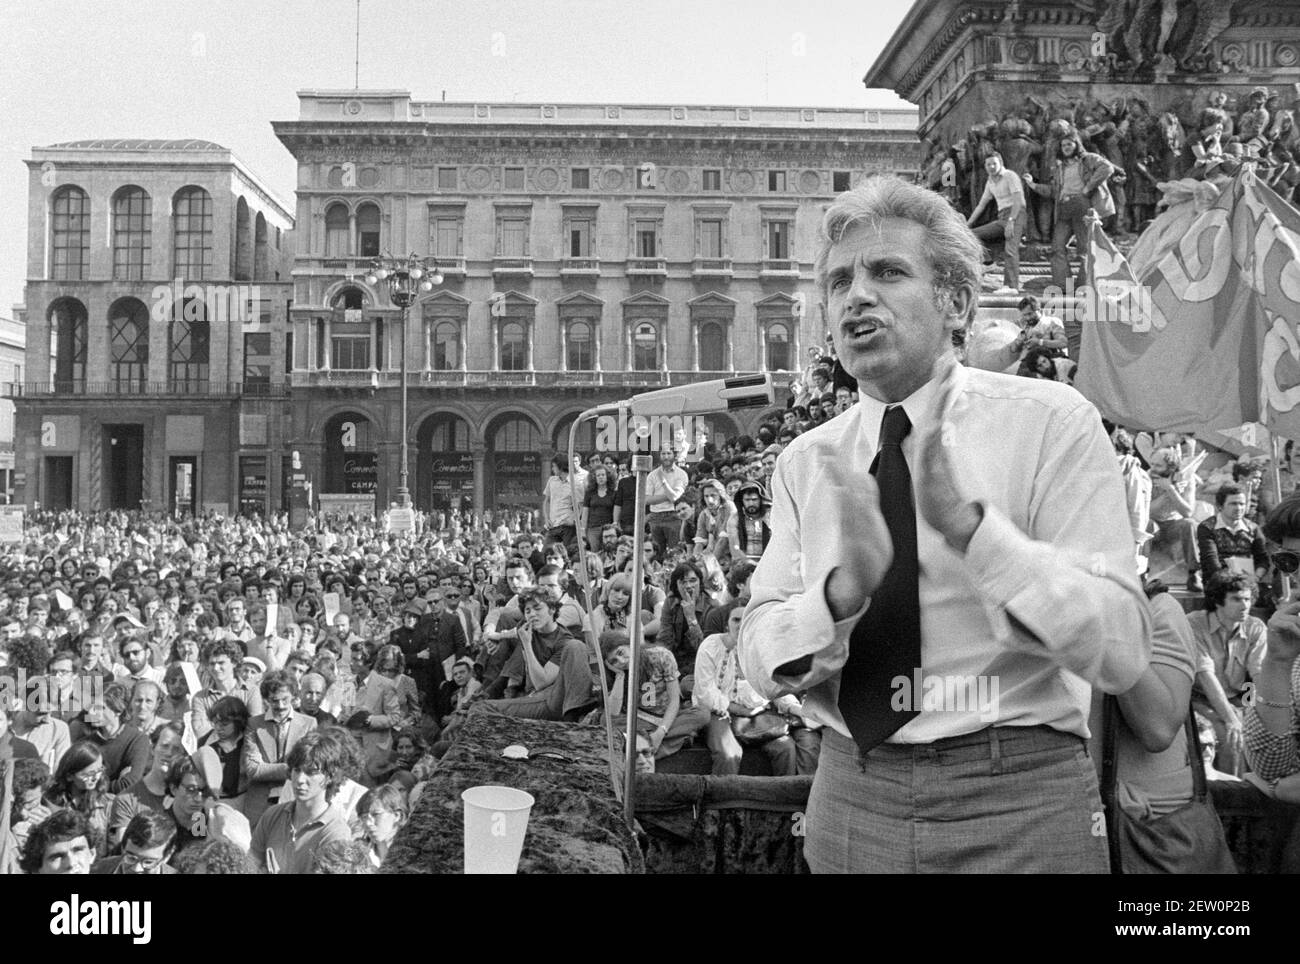 Milano (Italy), 1975 speech by Lucio Magri for Proletarian Democracy in Duomo Square Stock Photo